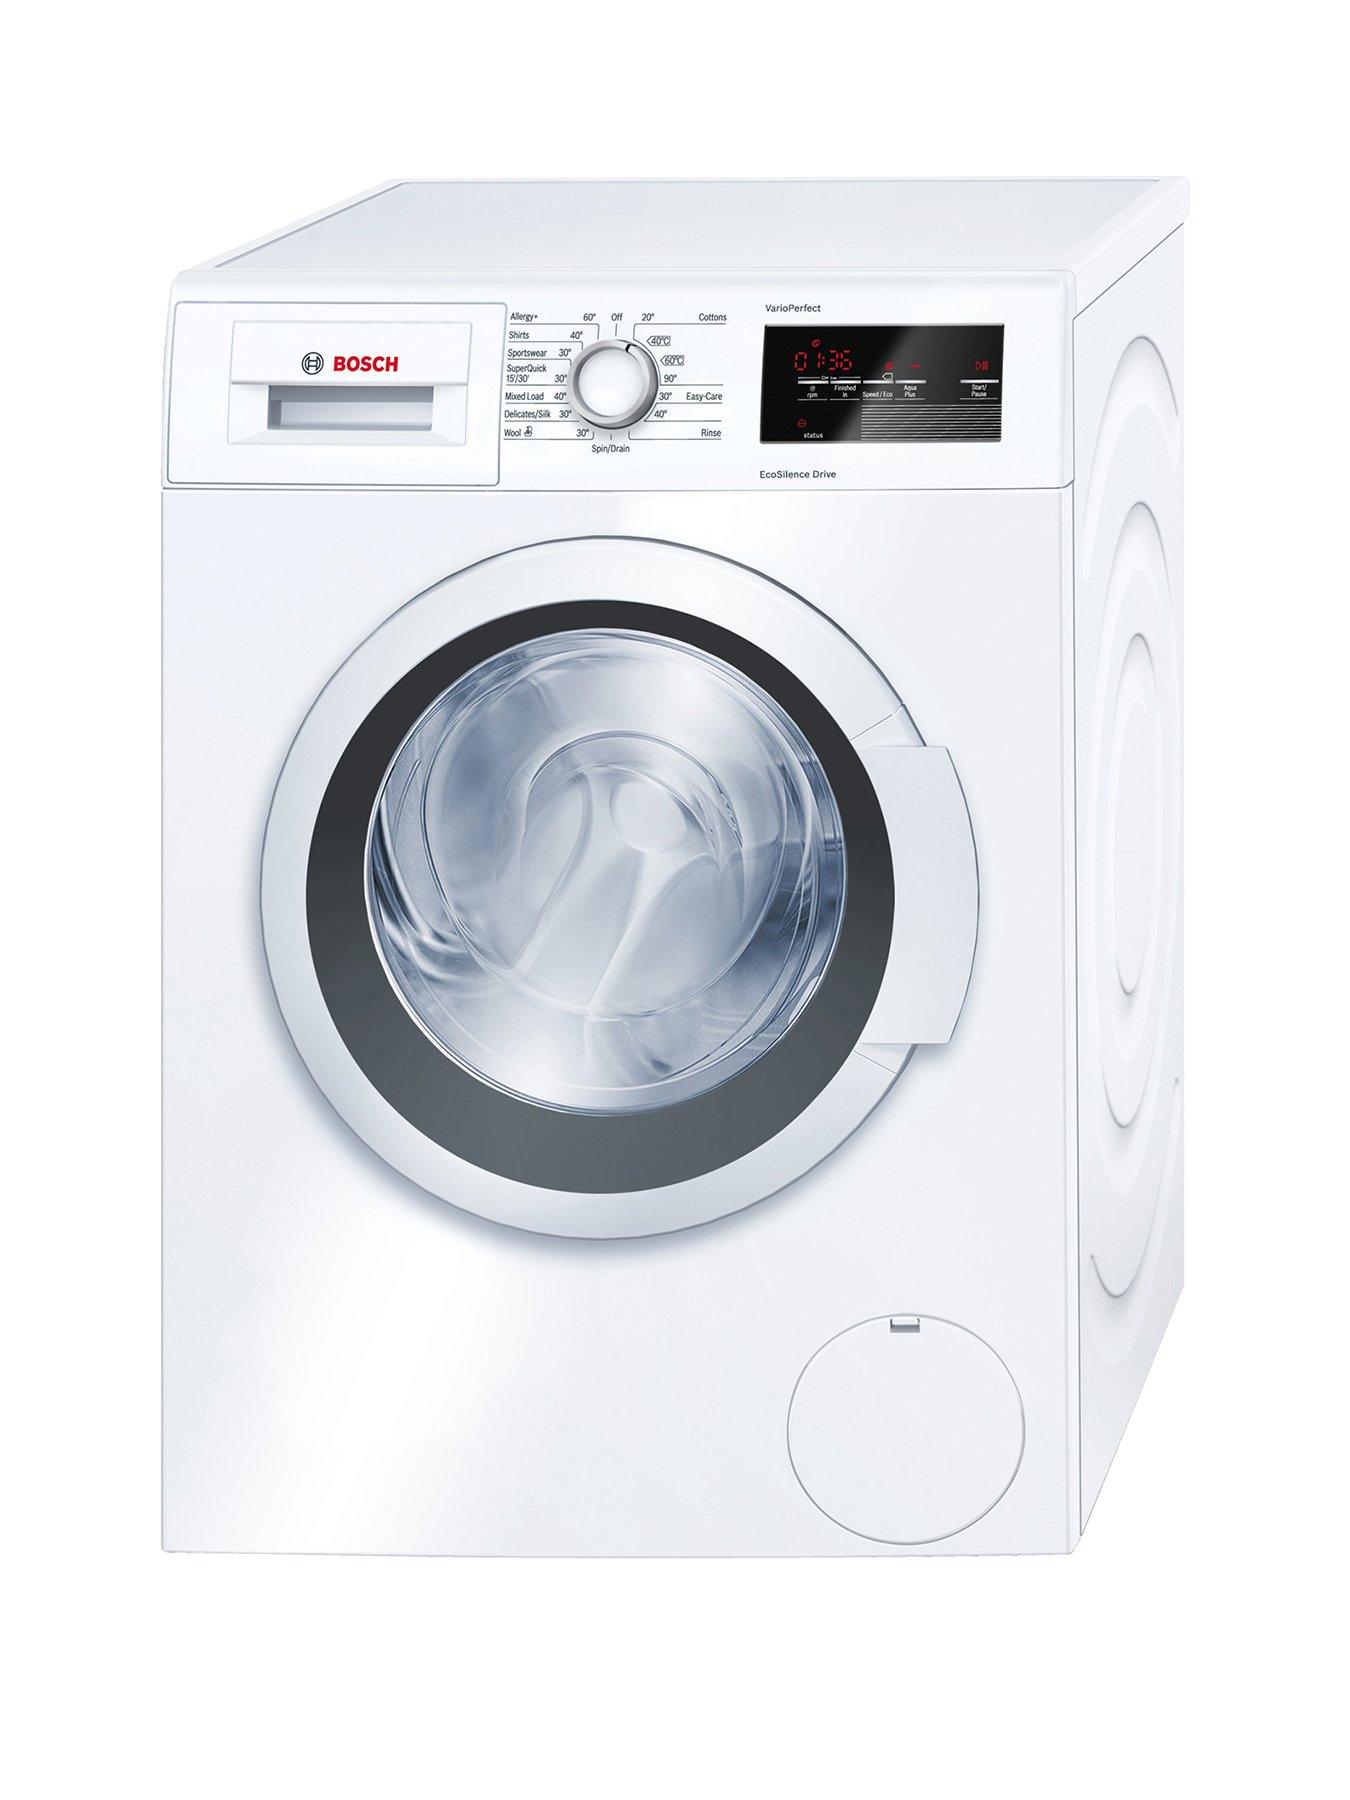 Bosch Varioperfect Serie 8 Washing Machines 2020 02 01